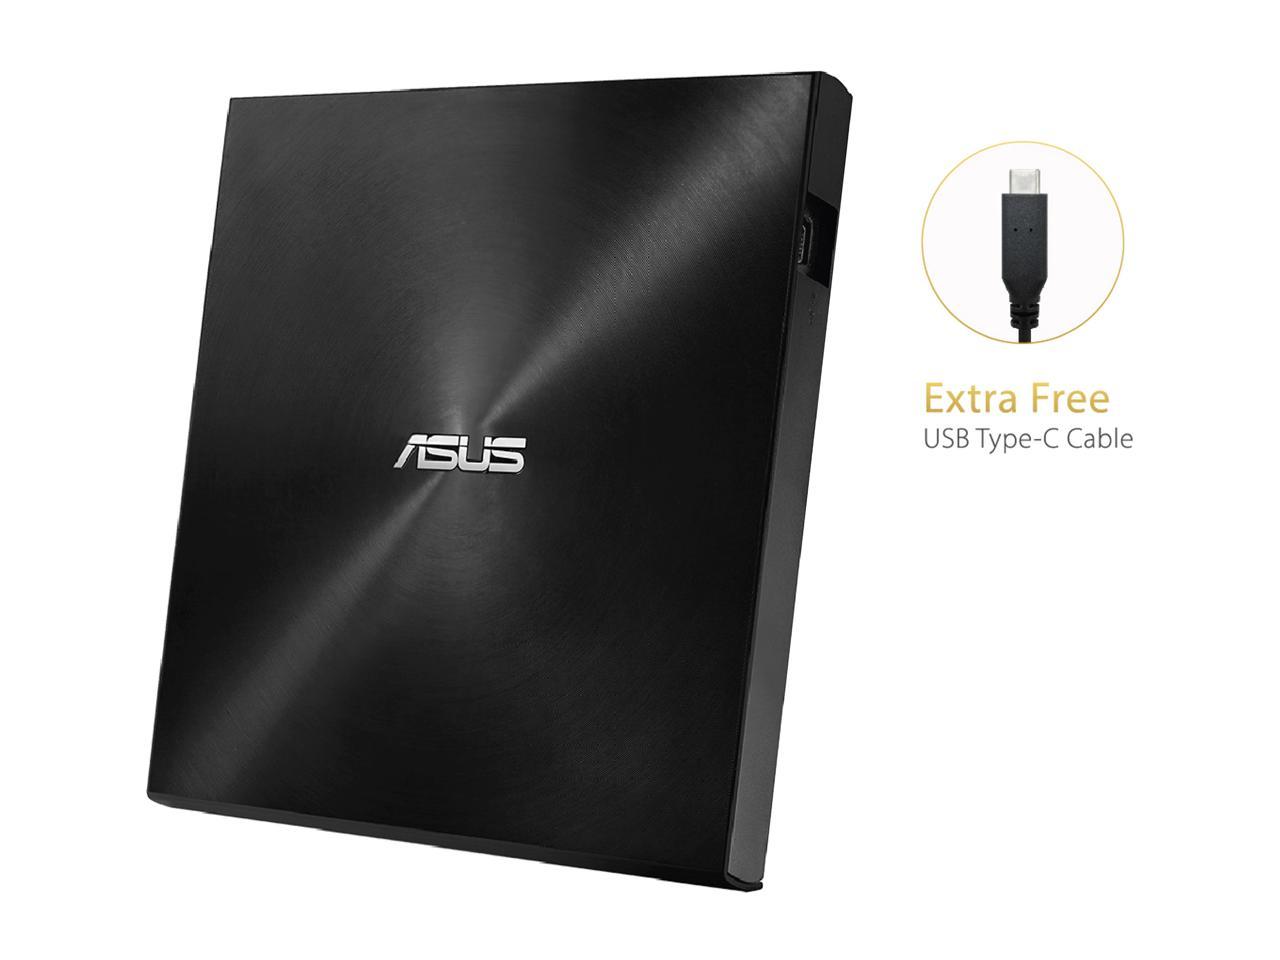 ASUS USB 2.0 External CD/DVD Drive Model SDRW-08U9M-U/BLK/G/A